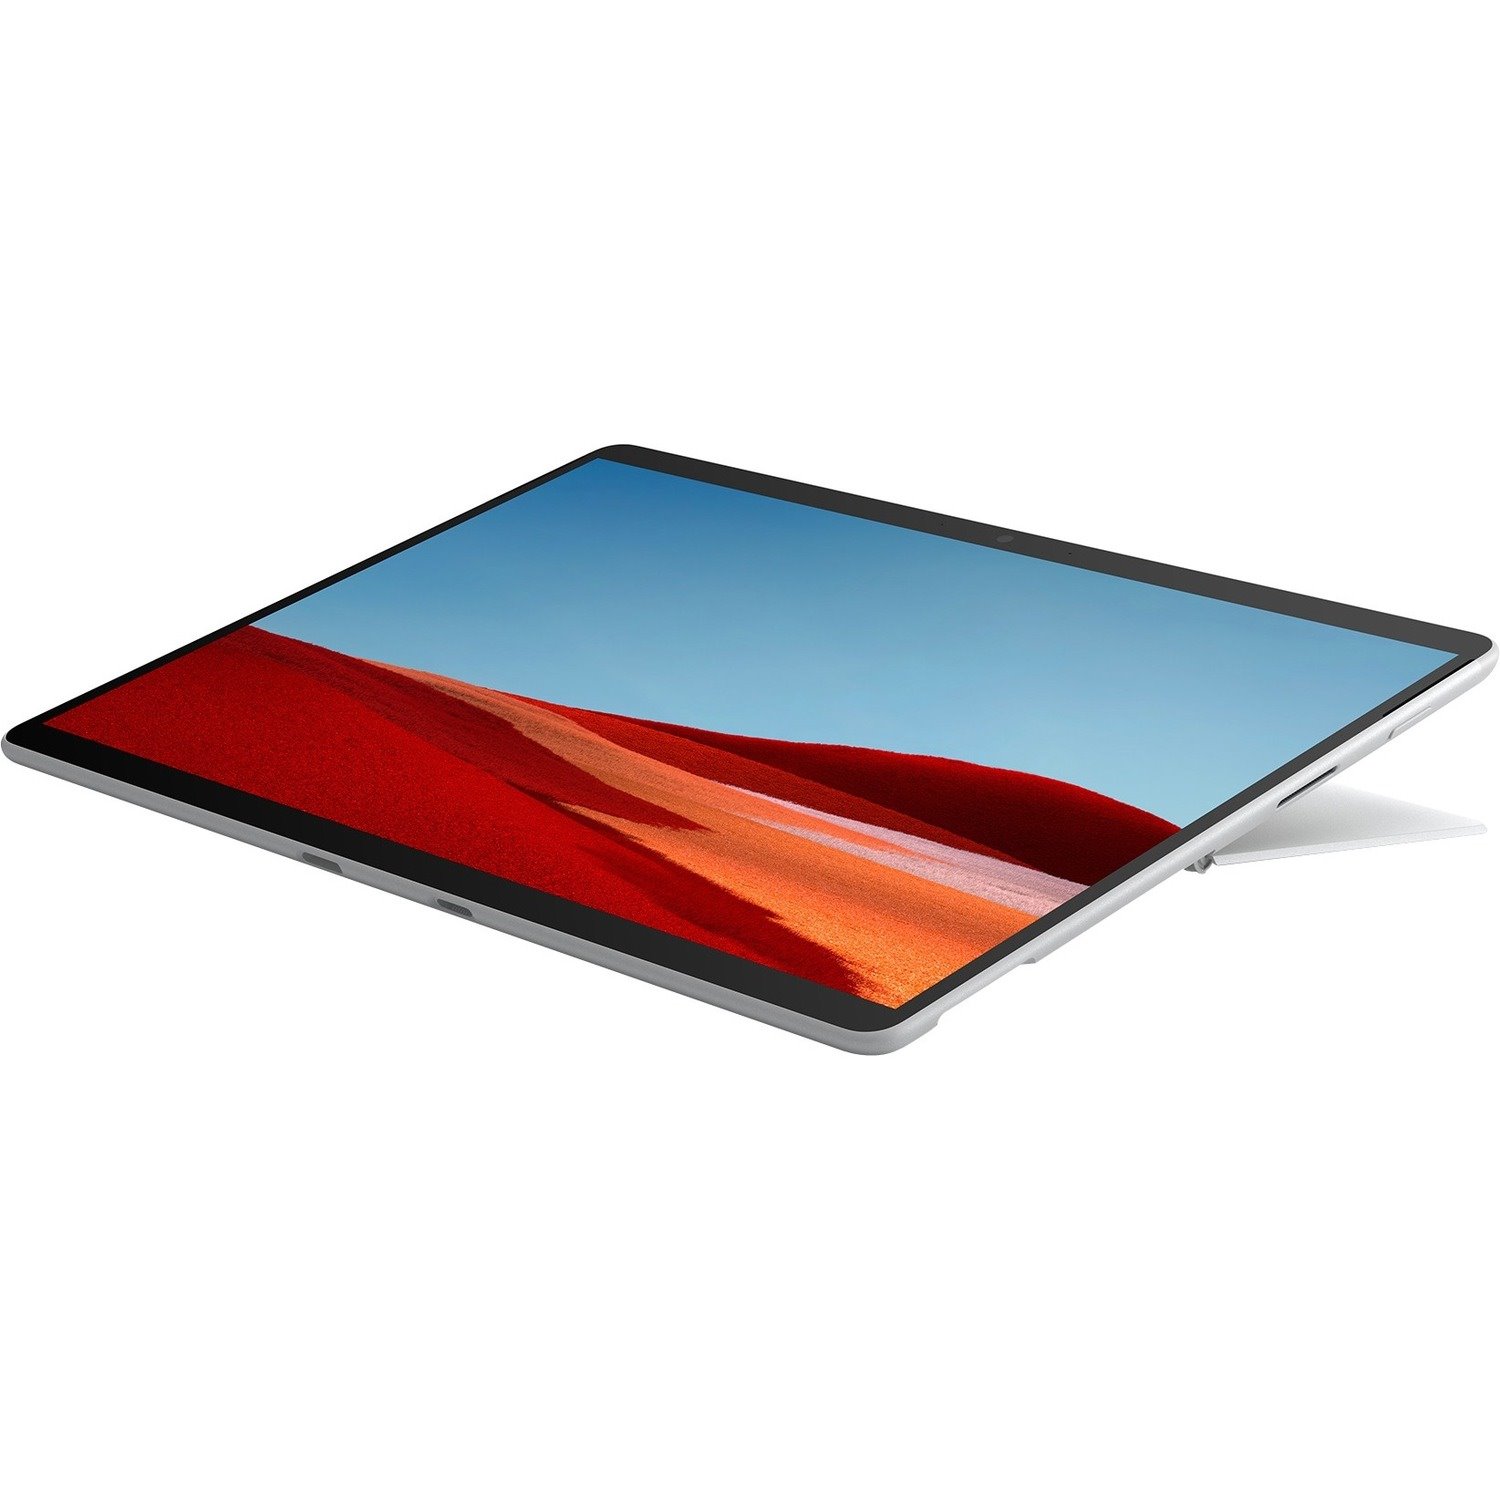 Microsoft Surface Pro X Tablet - 13" - 16 GB - 256 GB SSD - Windows 10 Pro - Silver